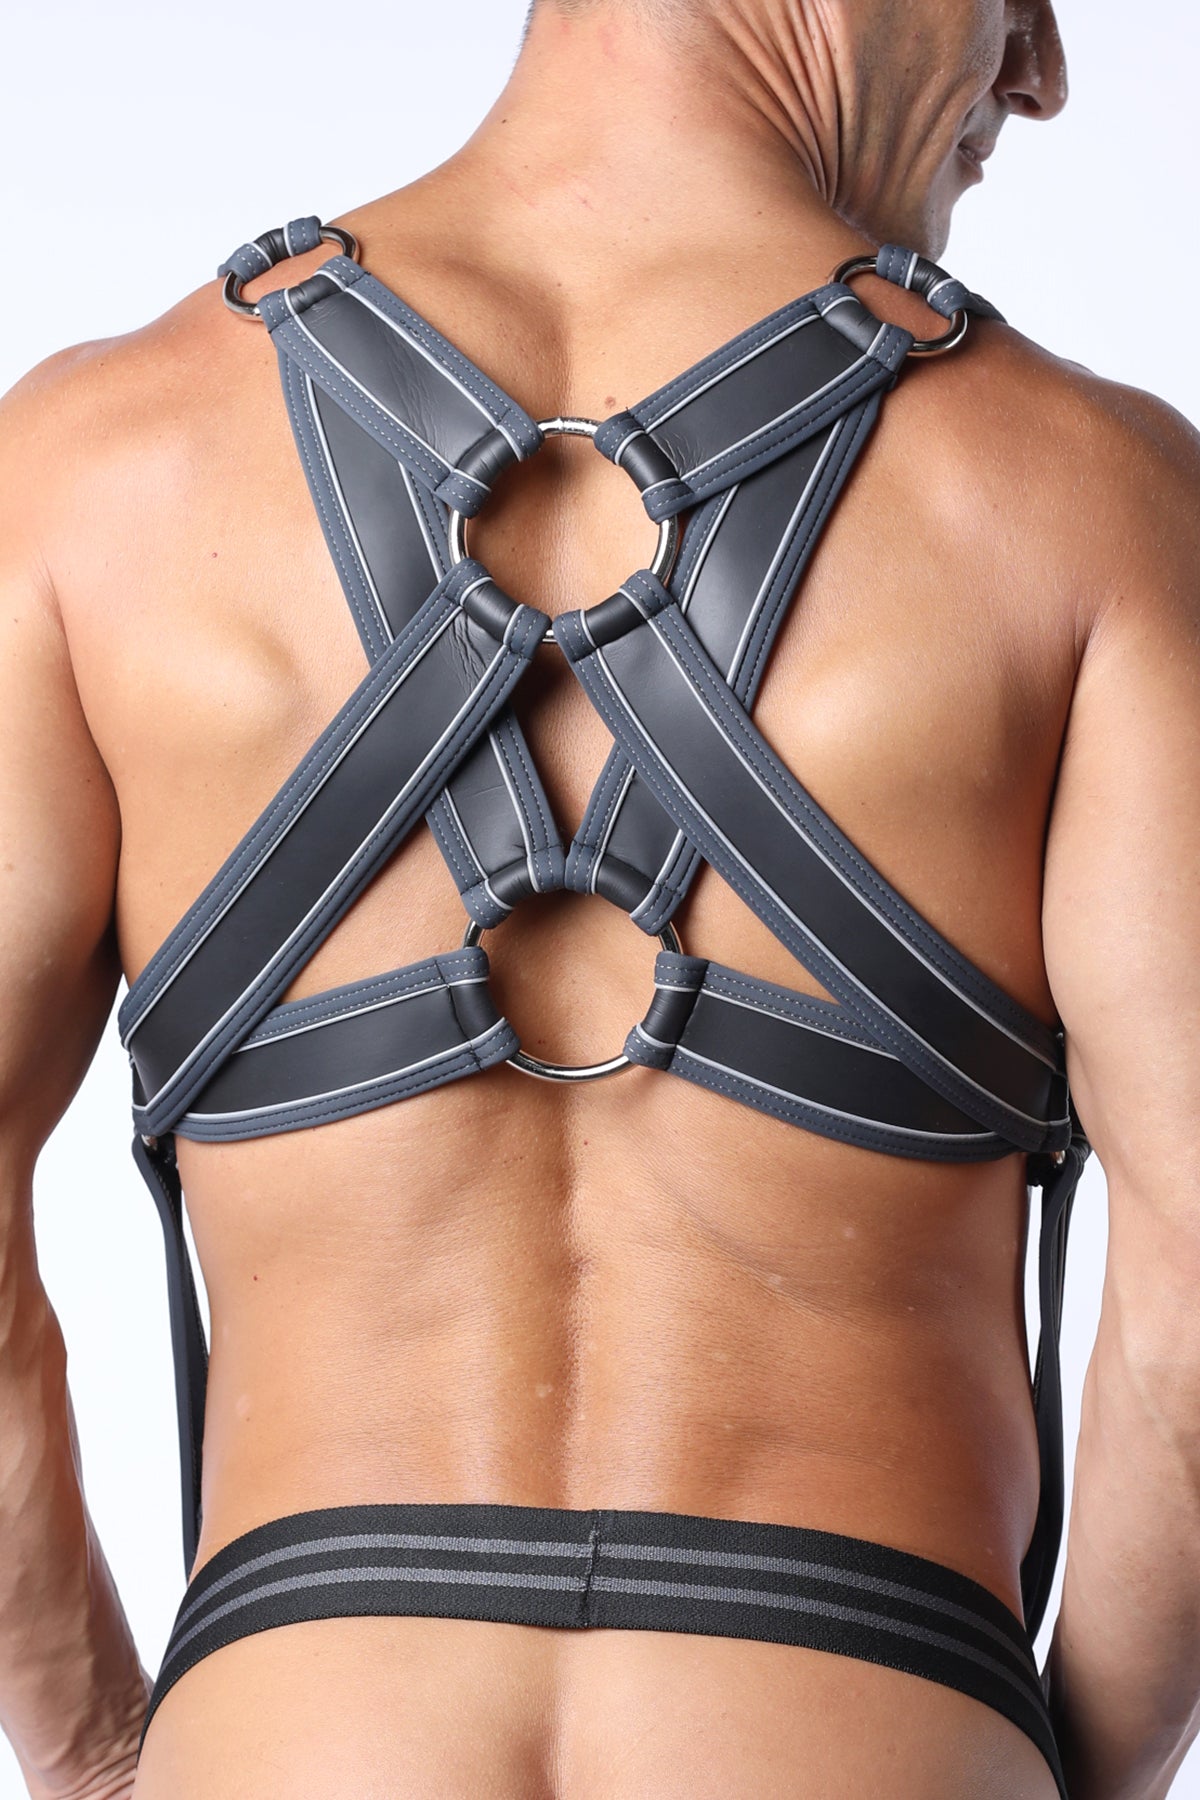 NEW Body Harness Black Silver Adjustable Hardware Reversible Chest Harness  Belt